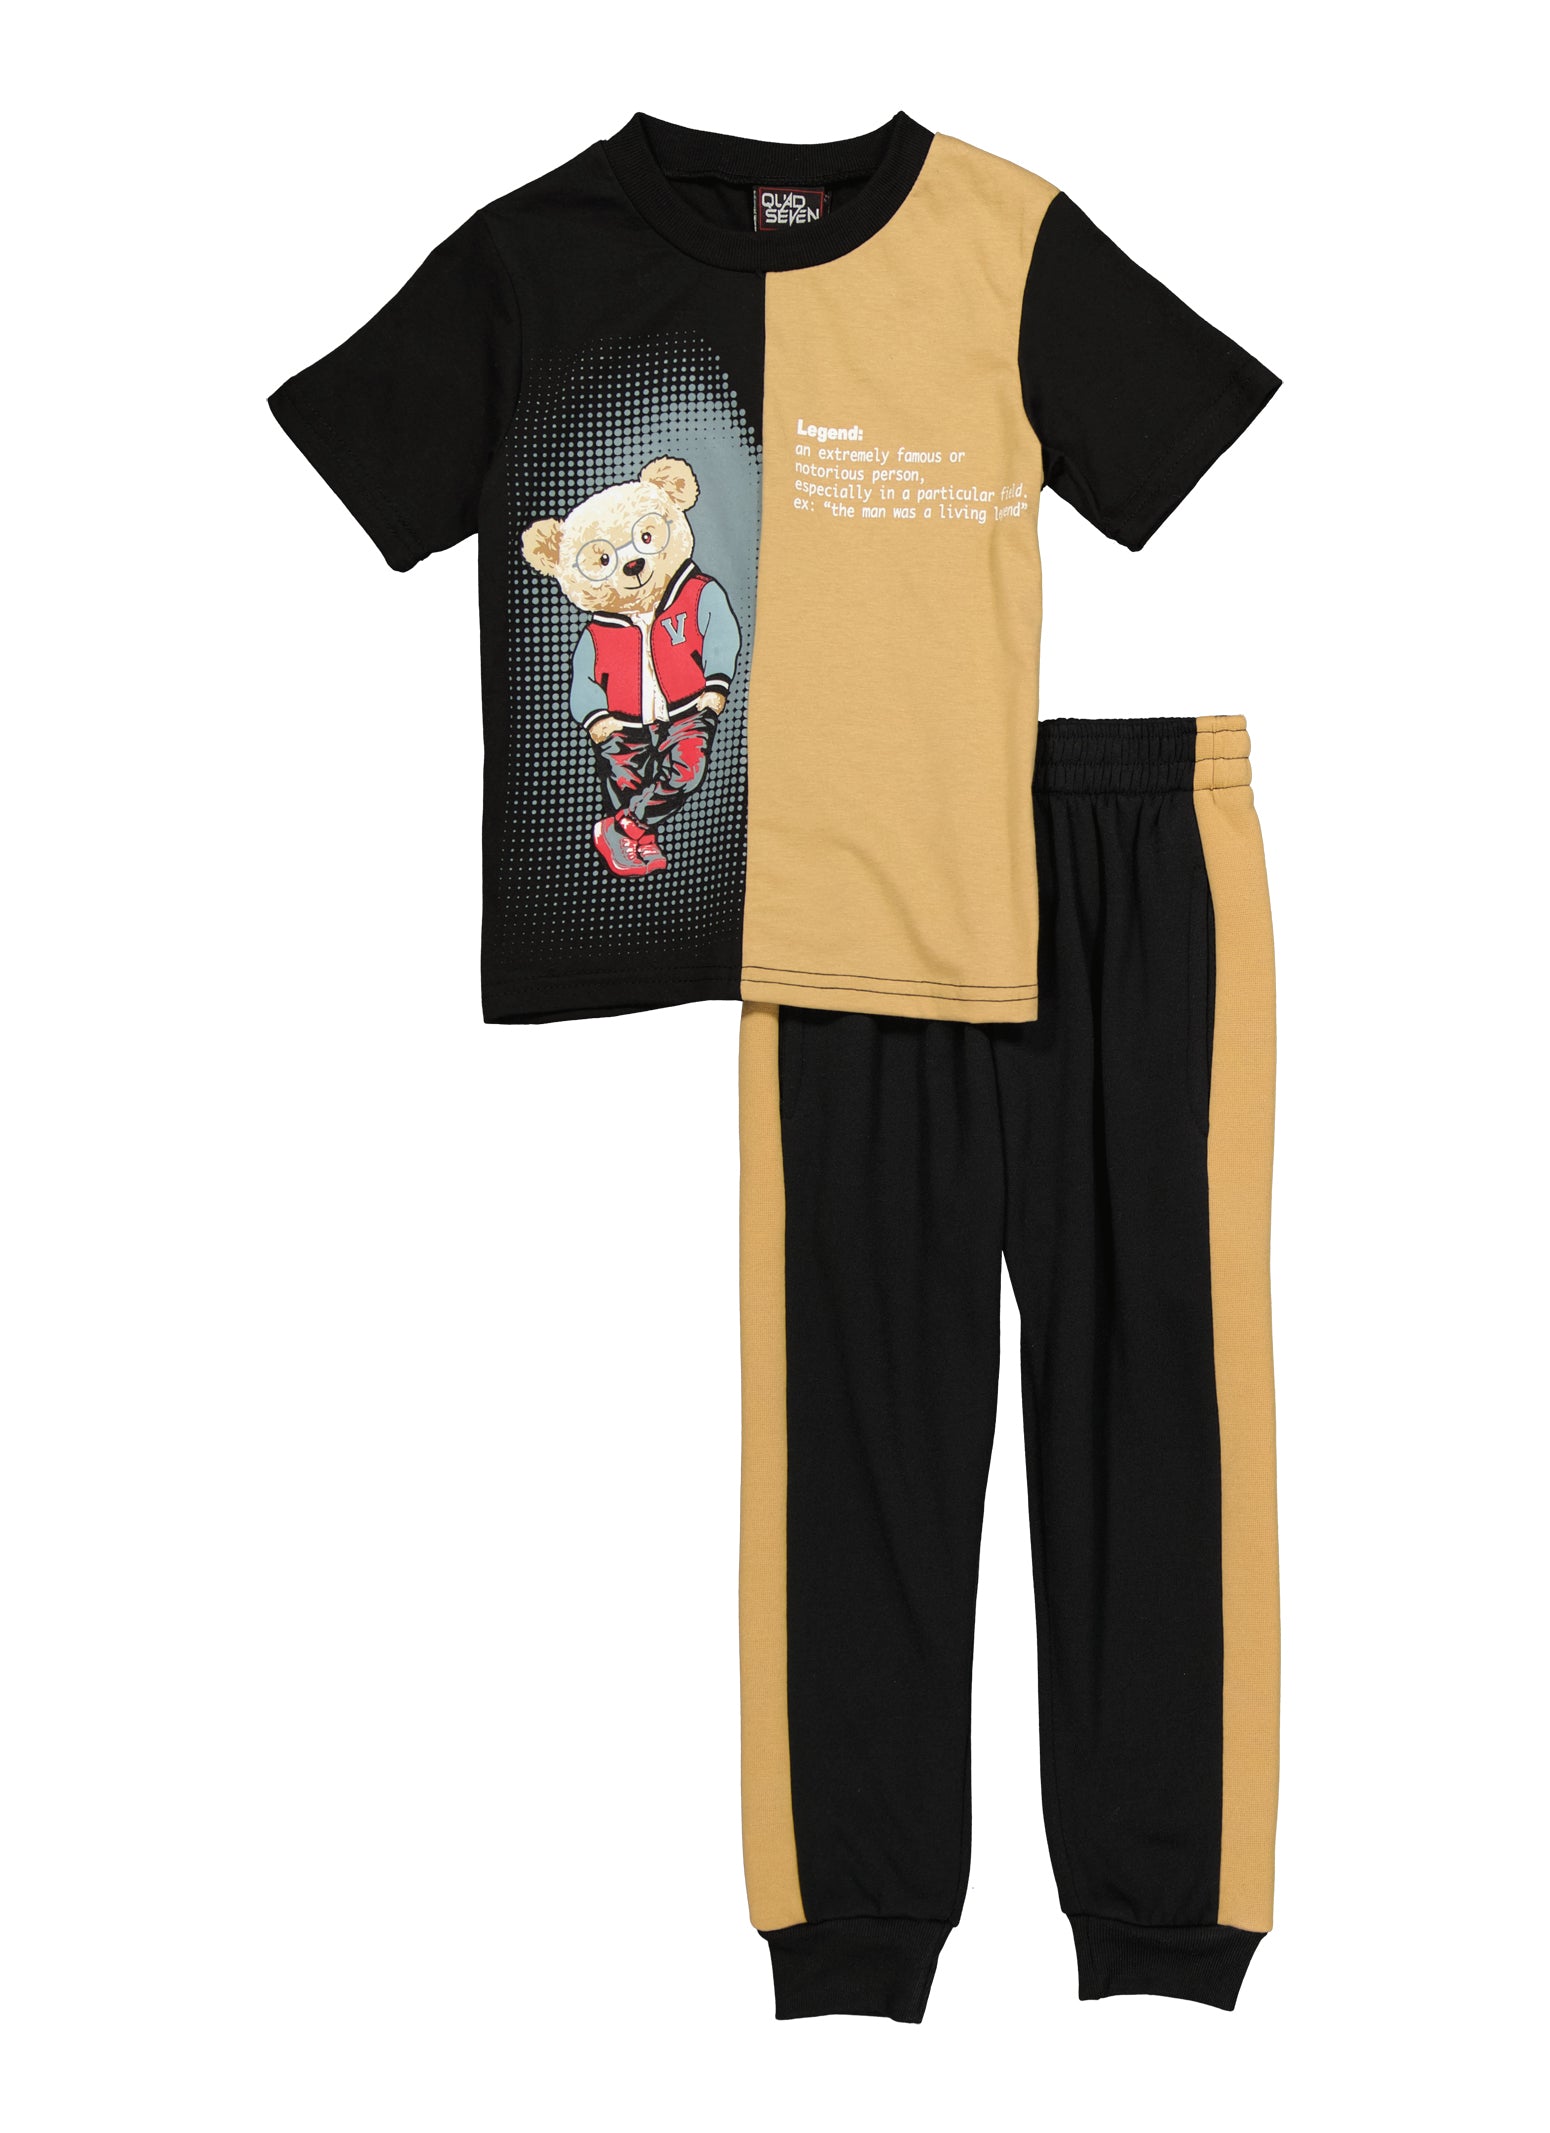 Little Boys Bear Legend Graphic Tee and Leggings Set, Multi, Size 4